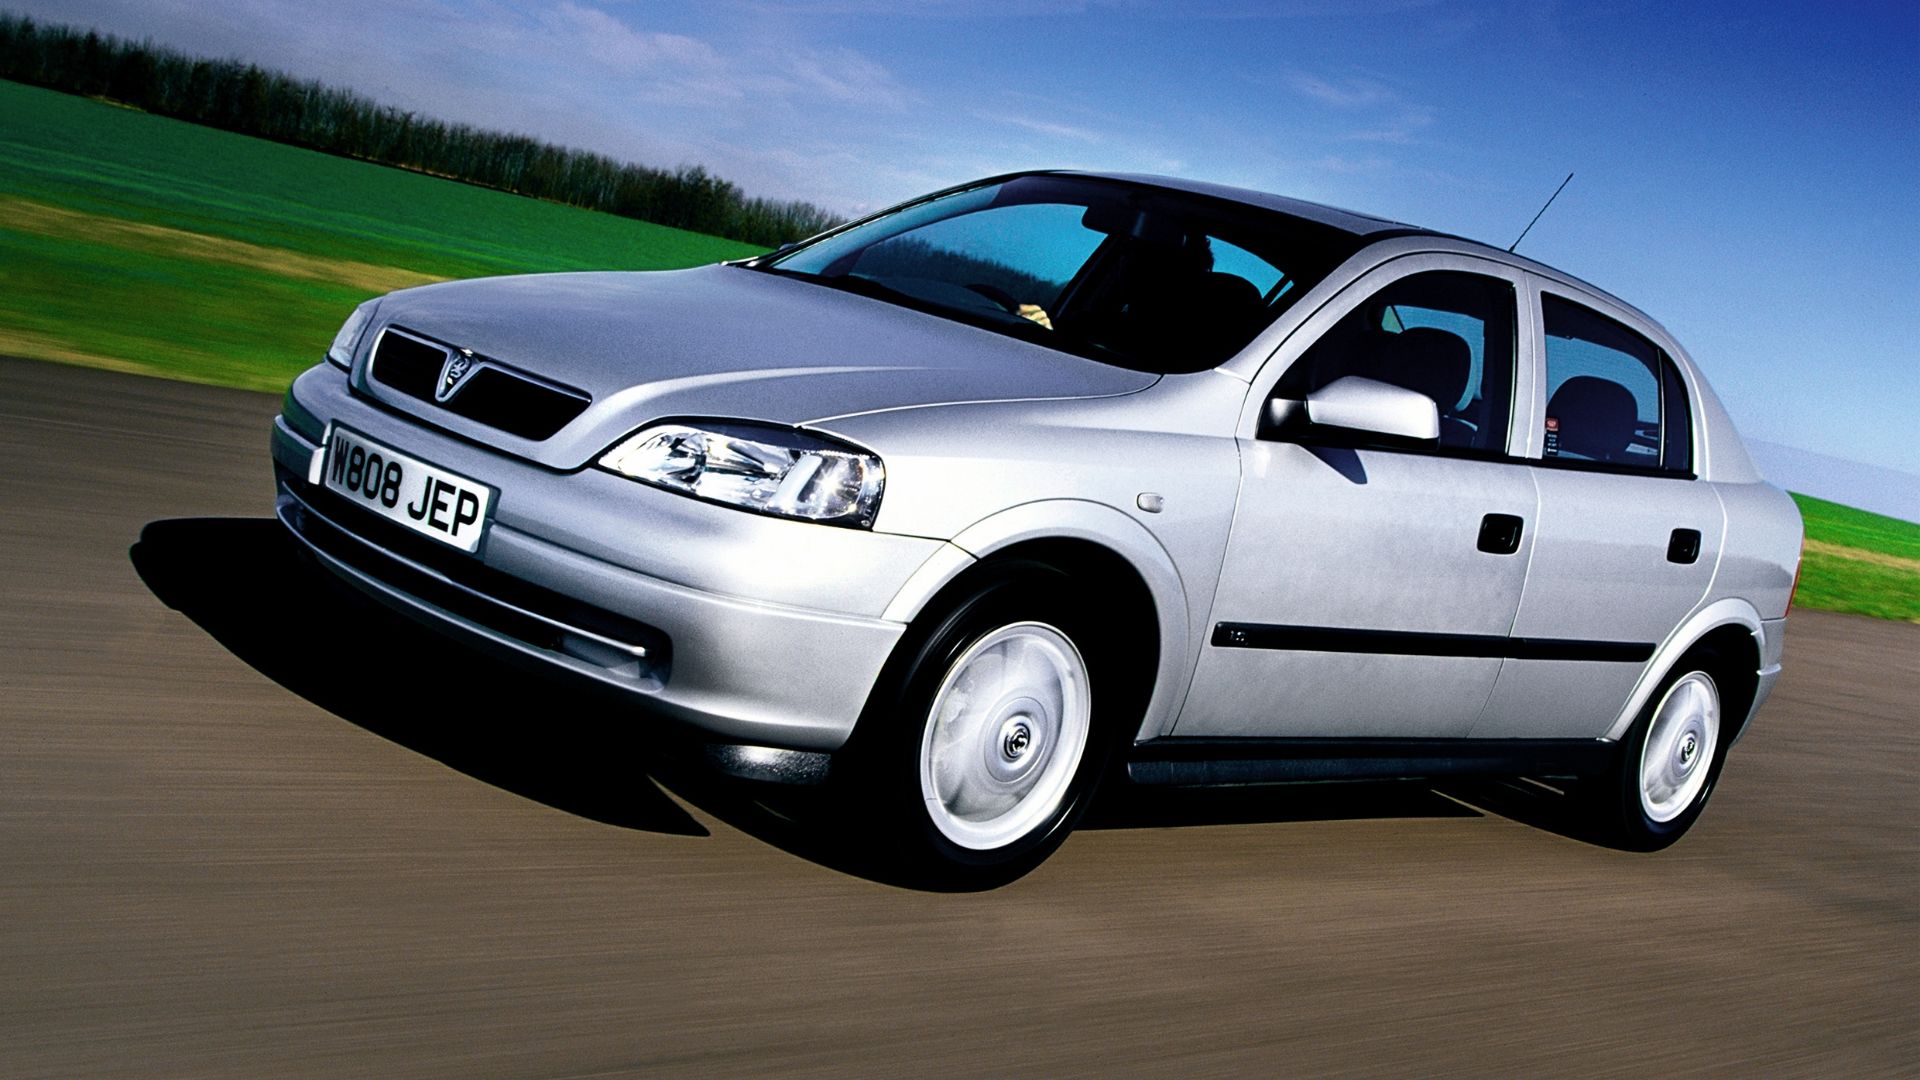 1999 Vauxhall Astra